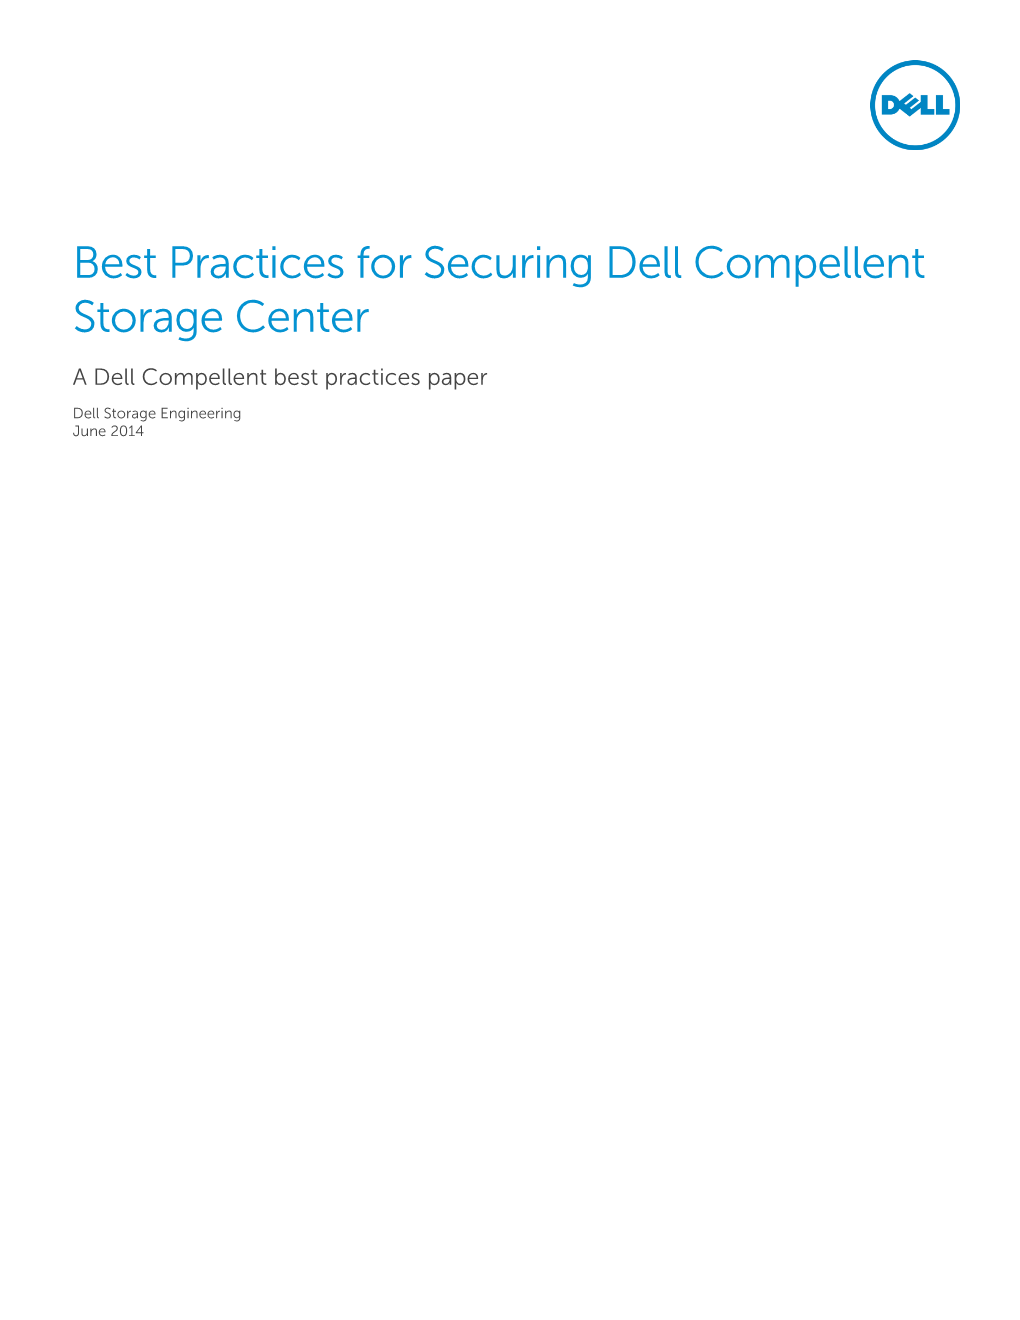 Best Practices for Securing Dell Compellent Storage Center